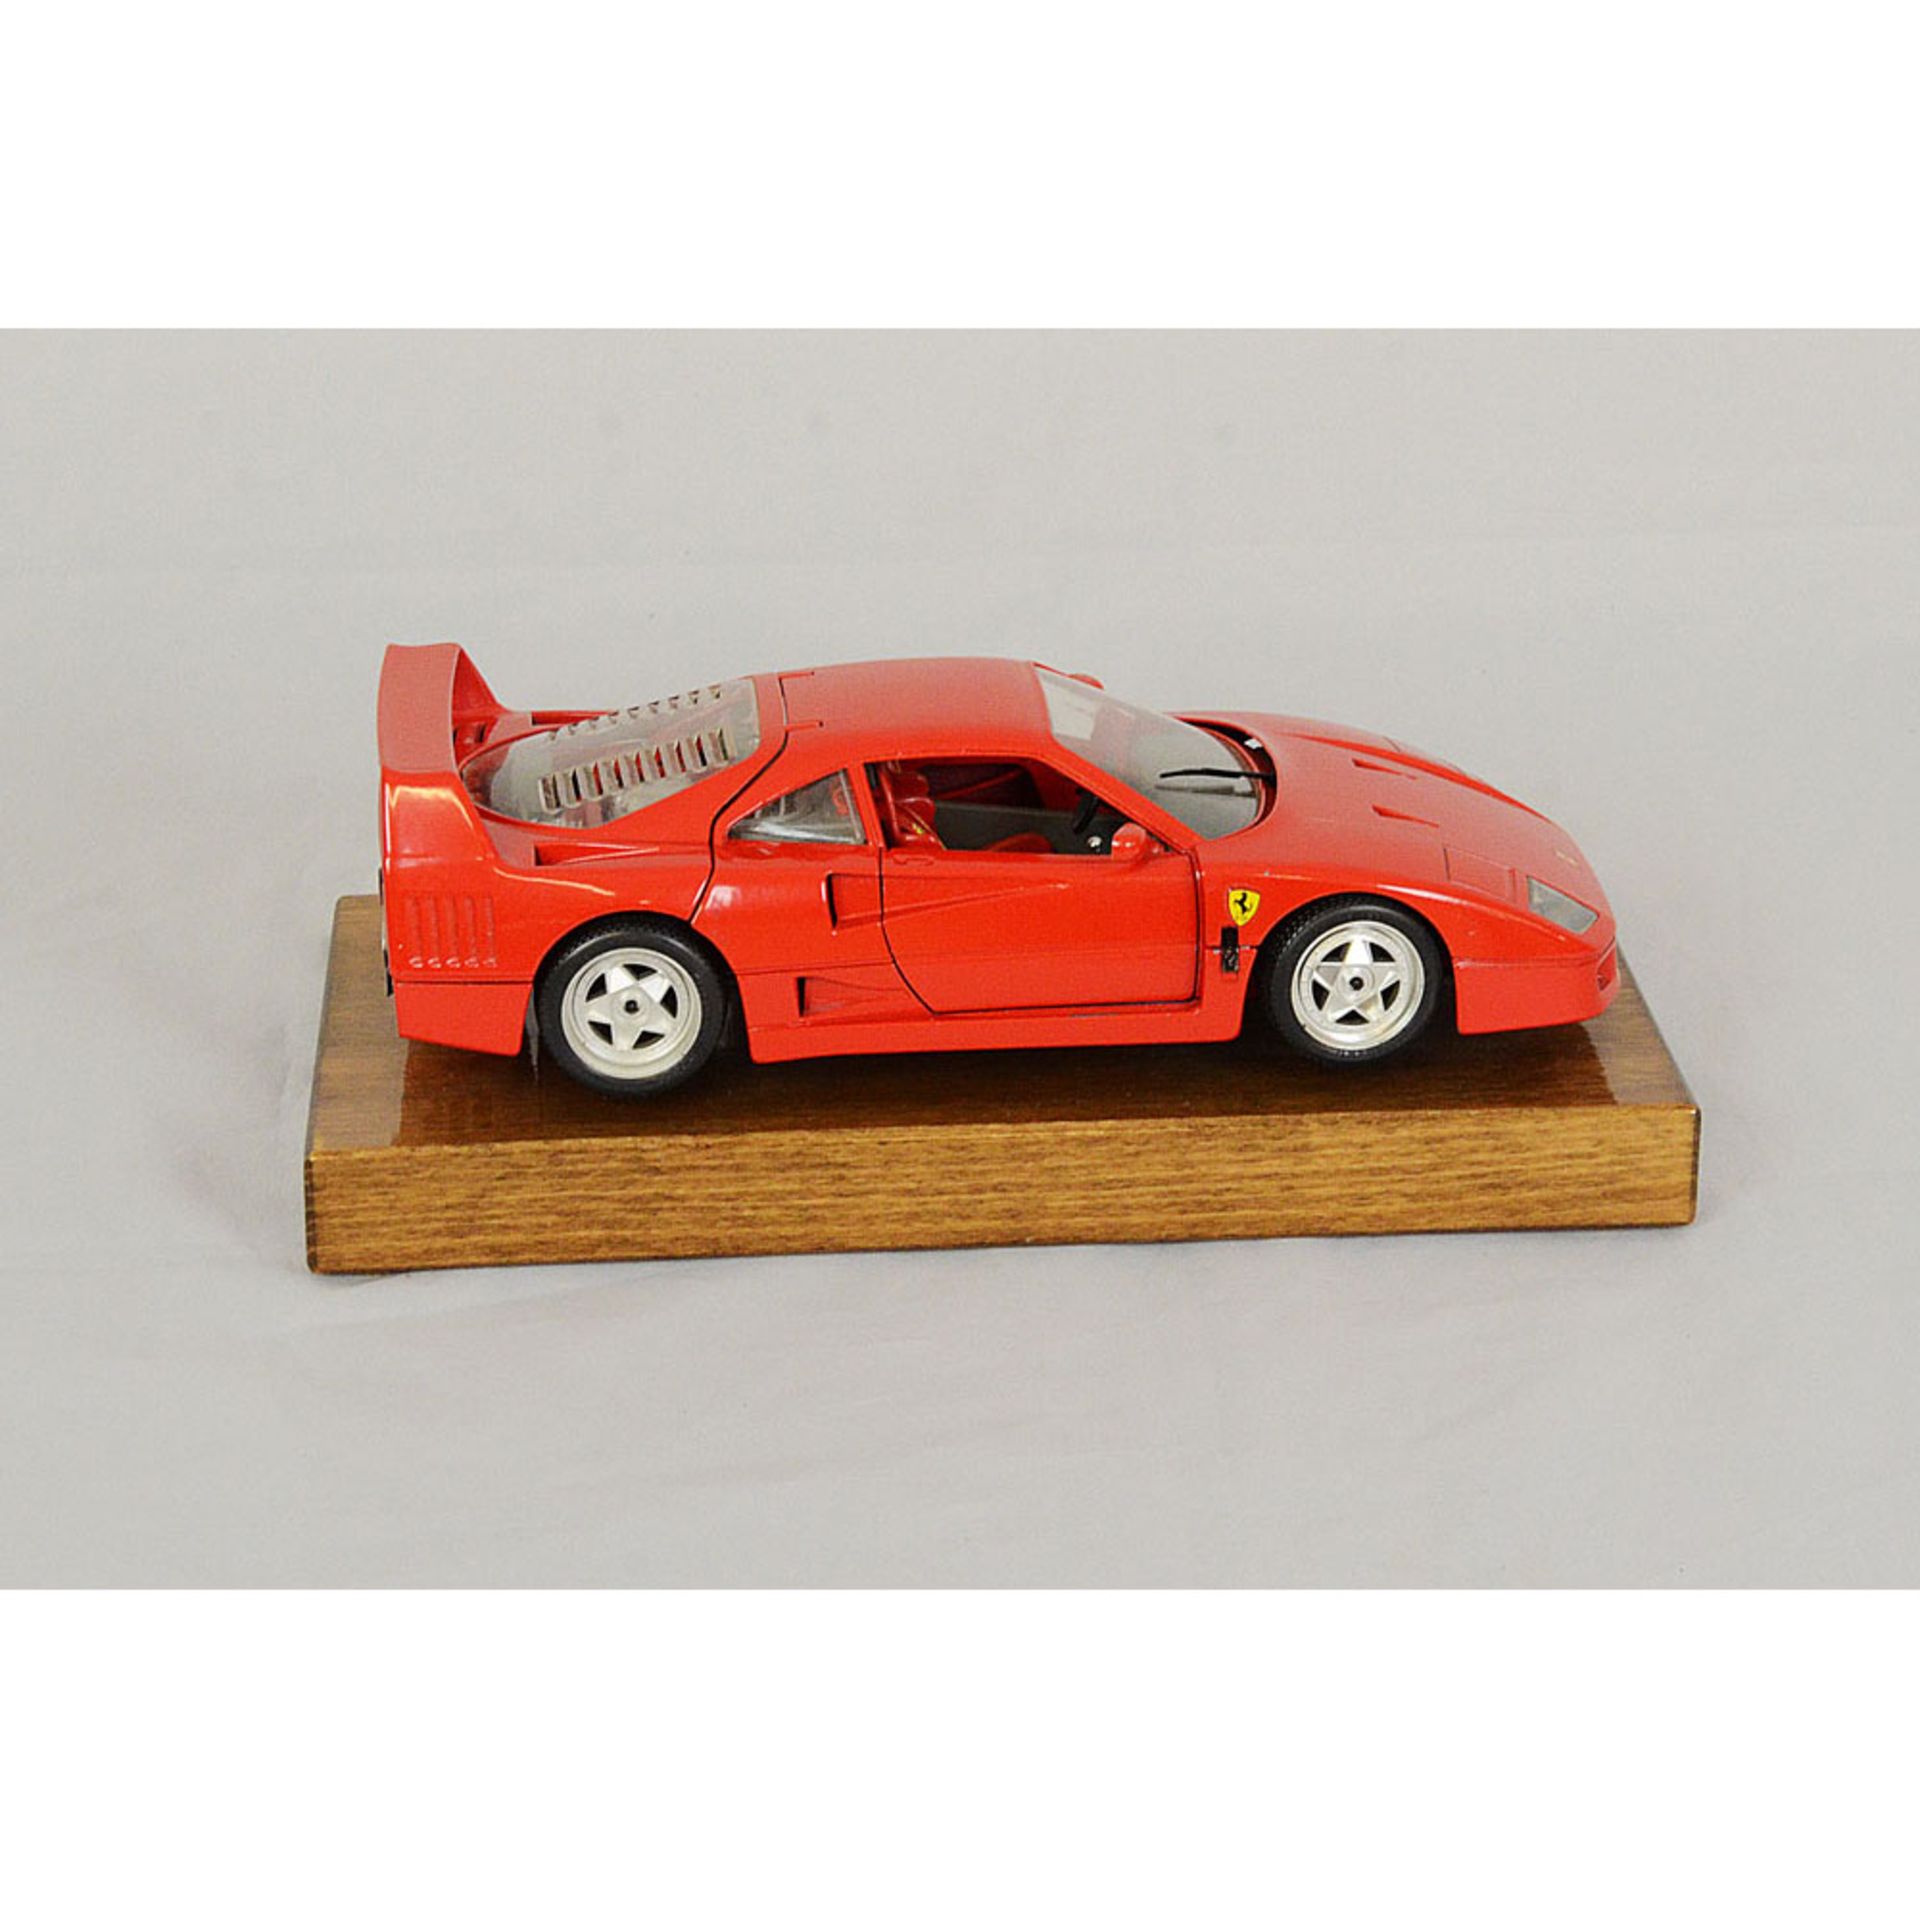 Burago Ferrari F40 1:18 scale model car - Image 4 of 10